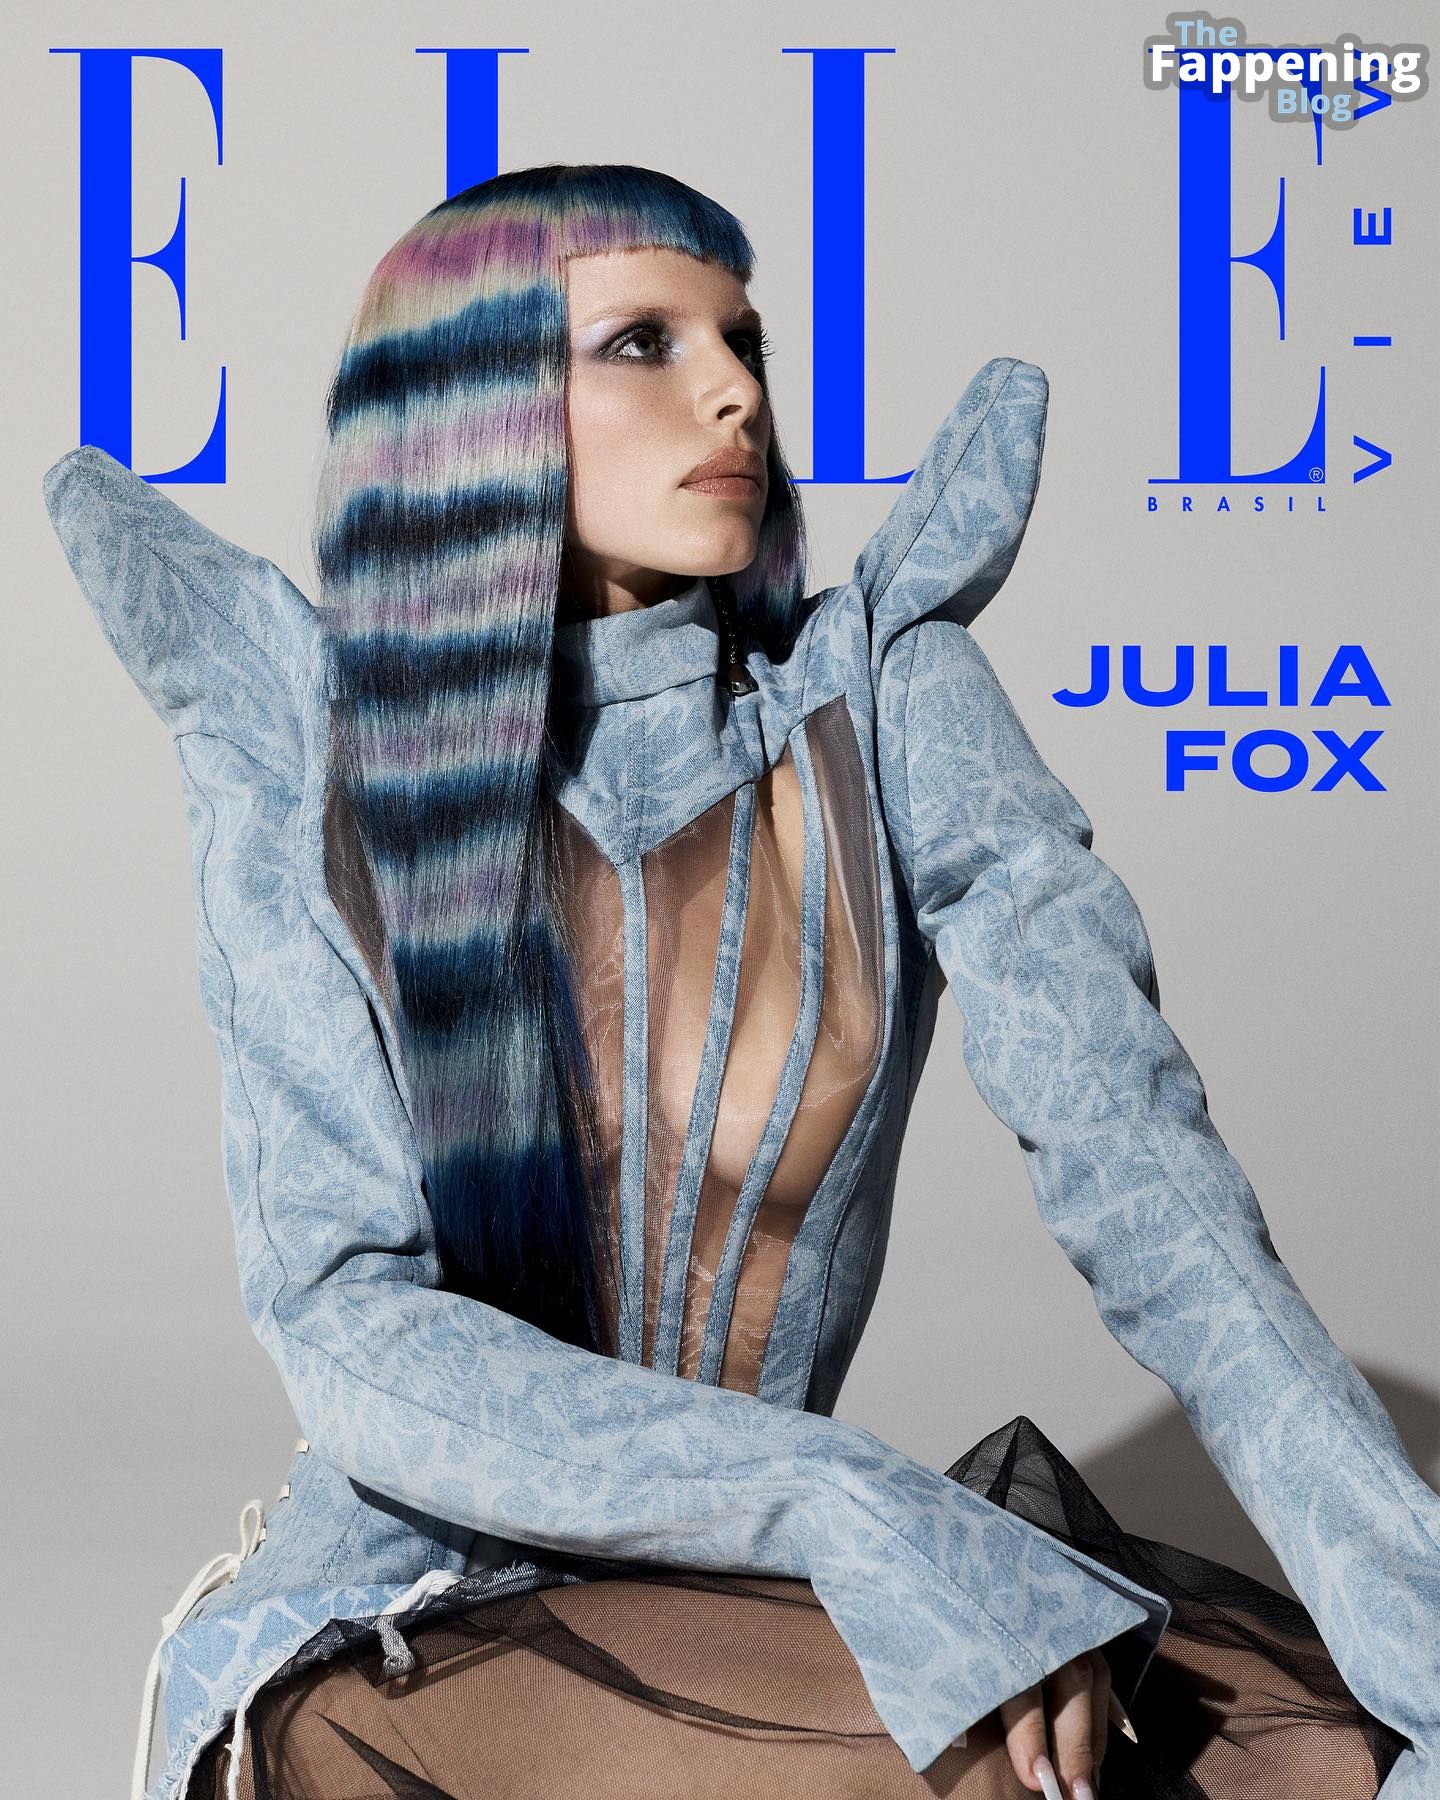 Julia-Fox-Sexy-1-The-Fappening-Blog.jpg